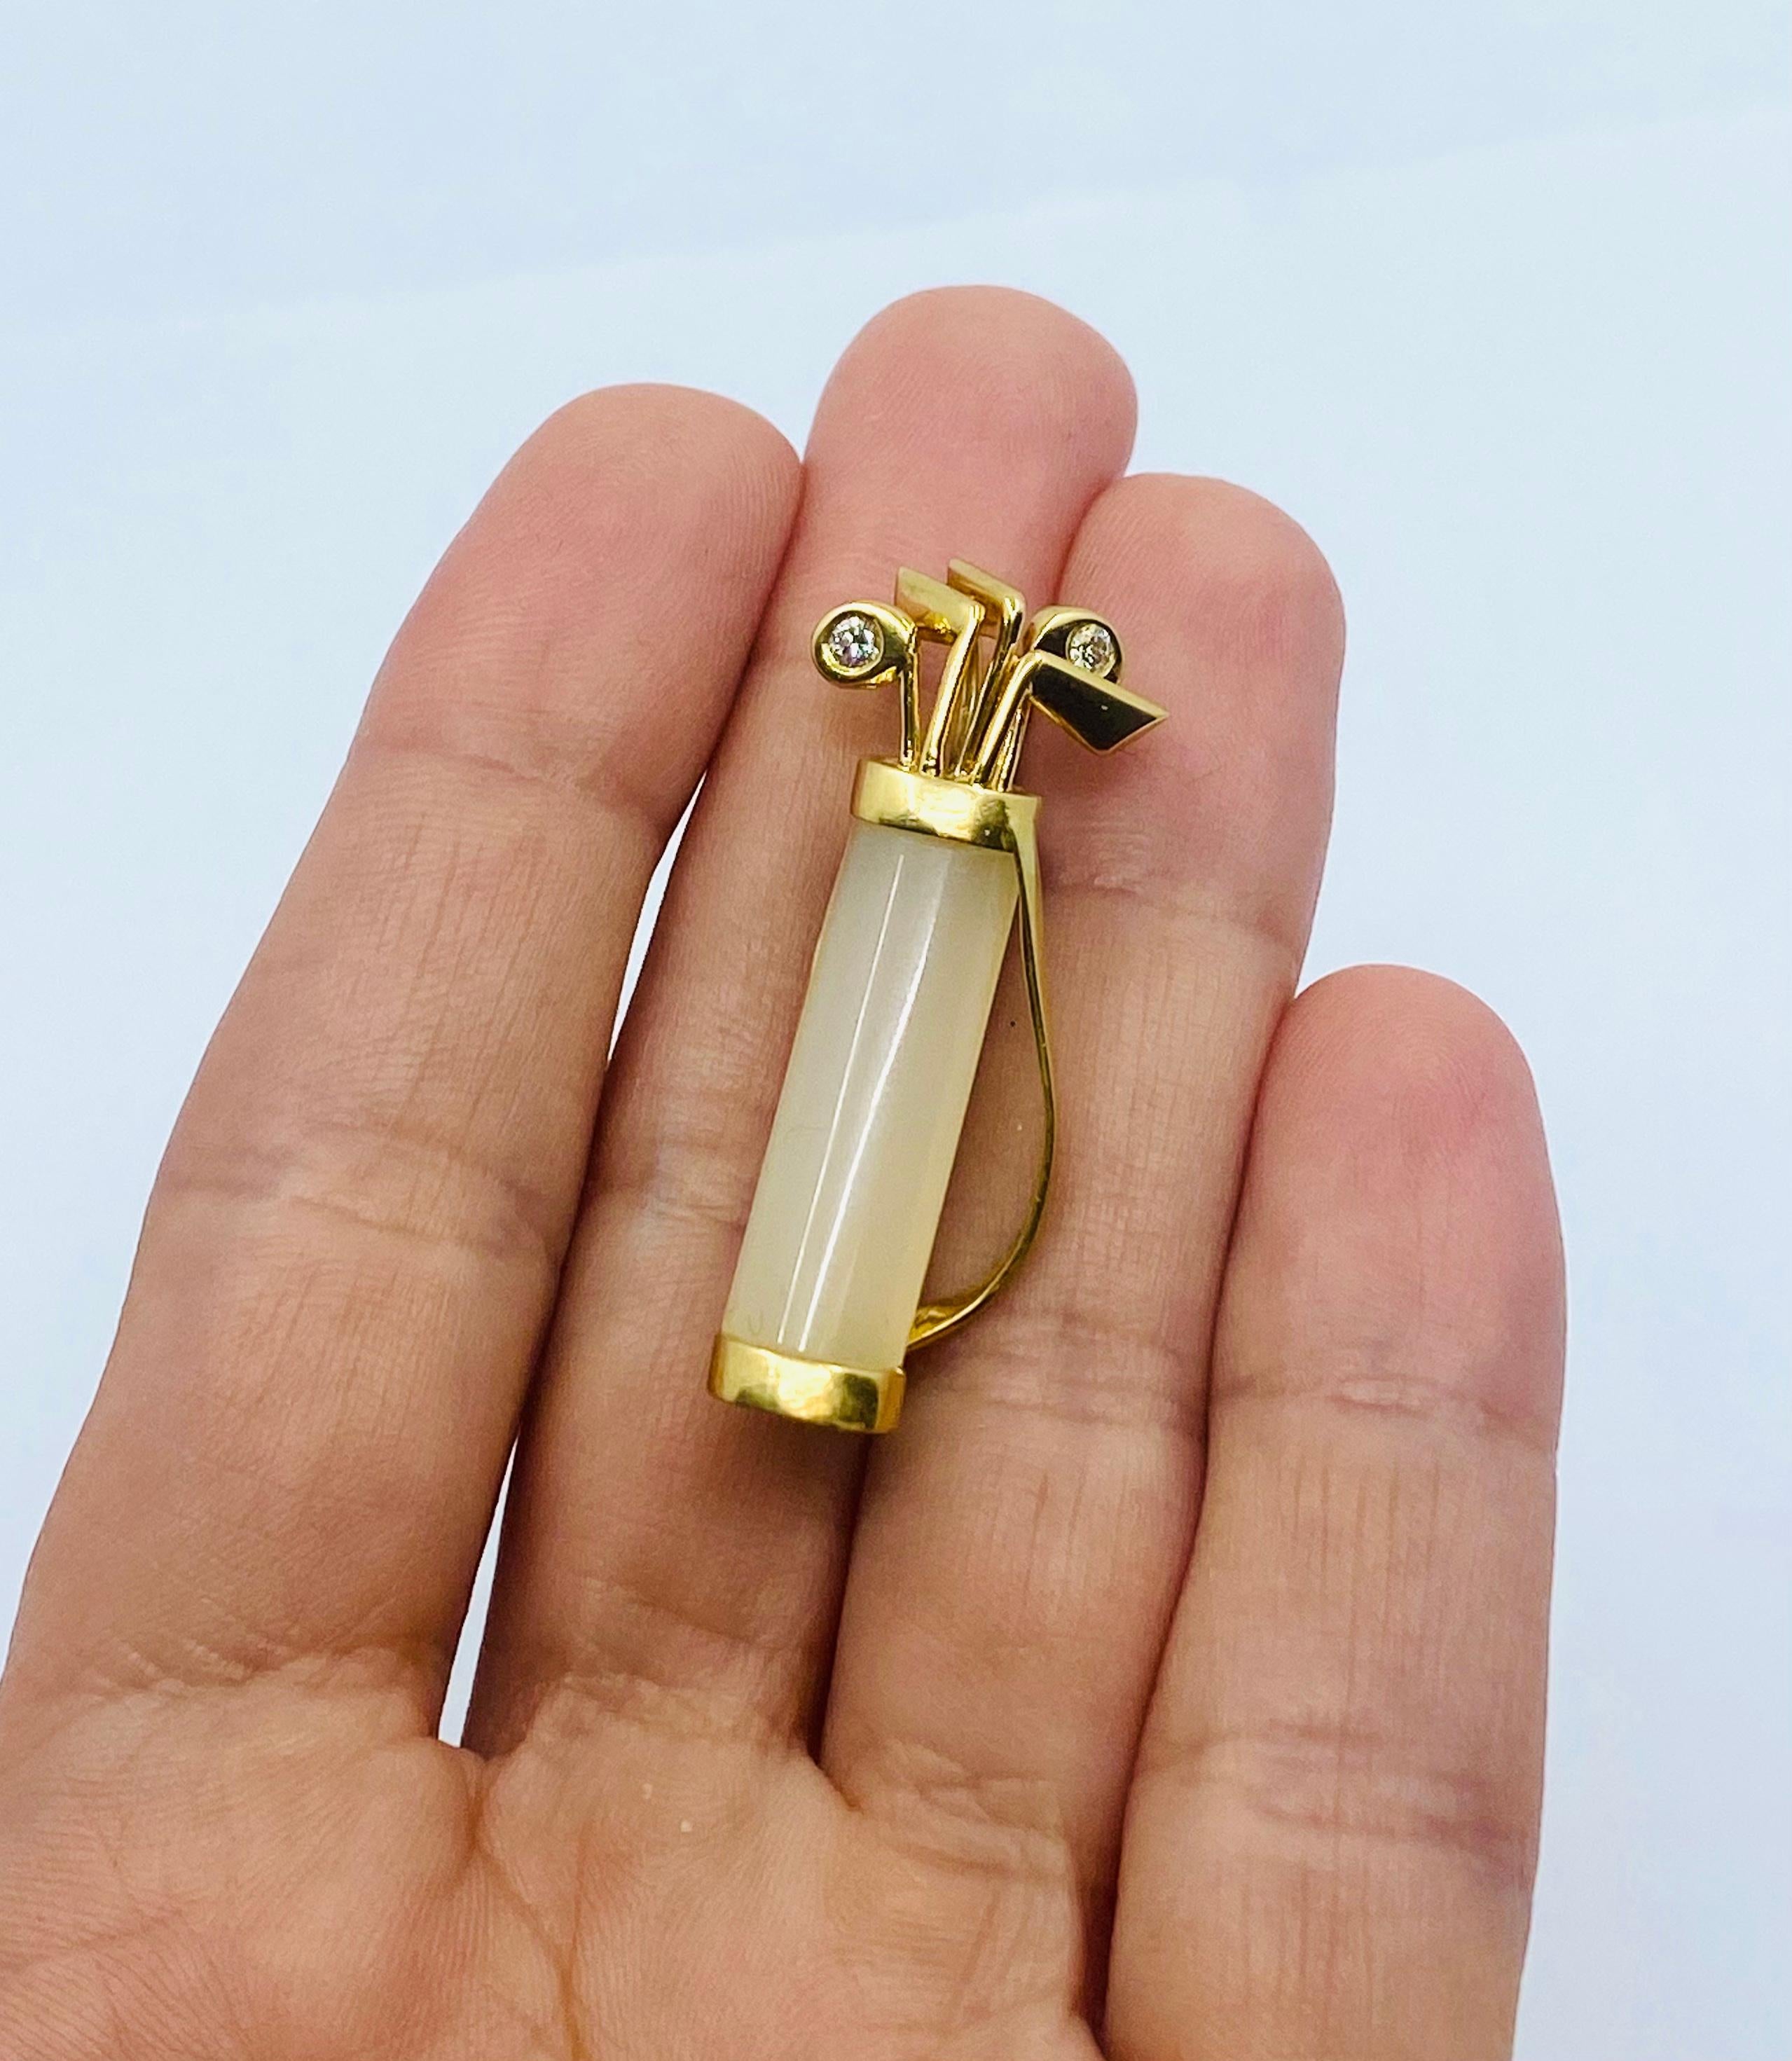 Designer: Cartier
Materials: 18 karat Yellow Gold
Weight:  9.8 grams
Gemstone:  Diamond
Gemstone: Chalcedony
Measurement: 1 1/2